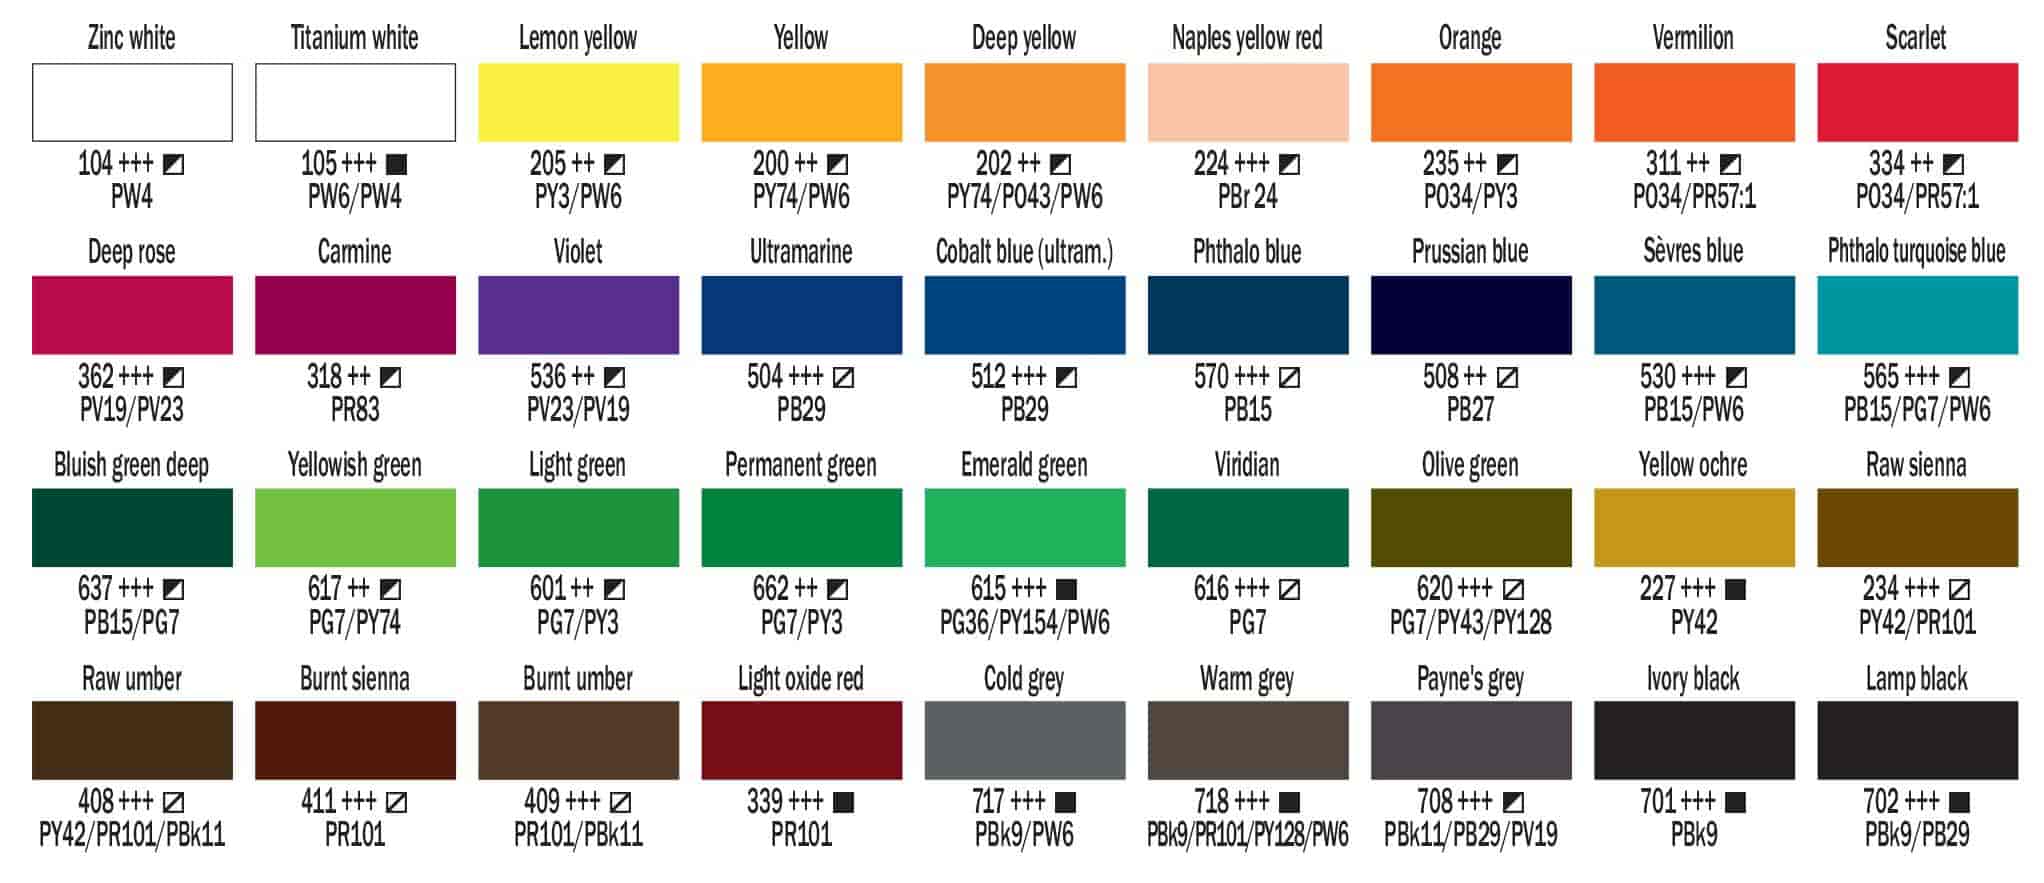 Art Creation oil color chart